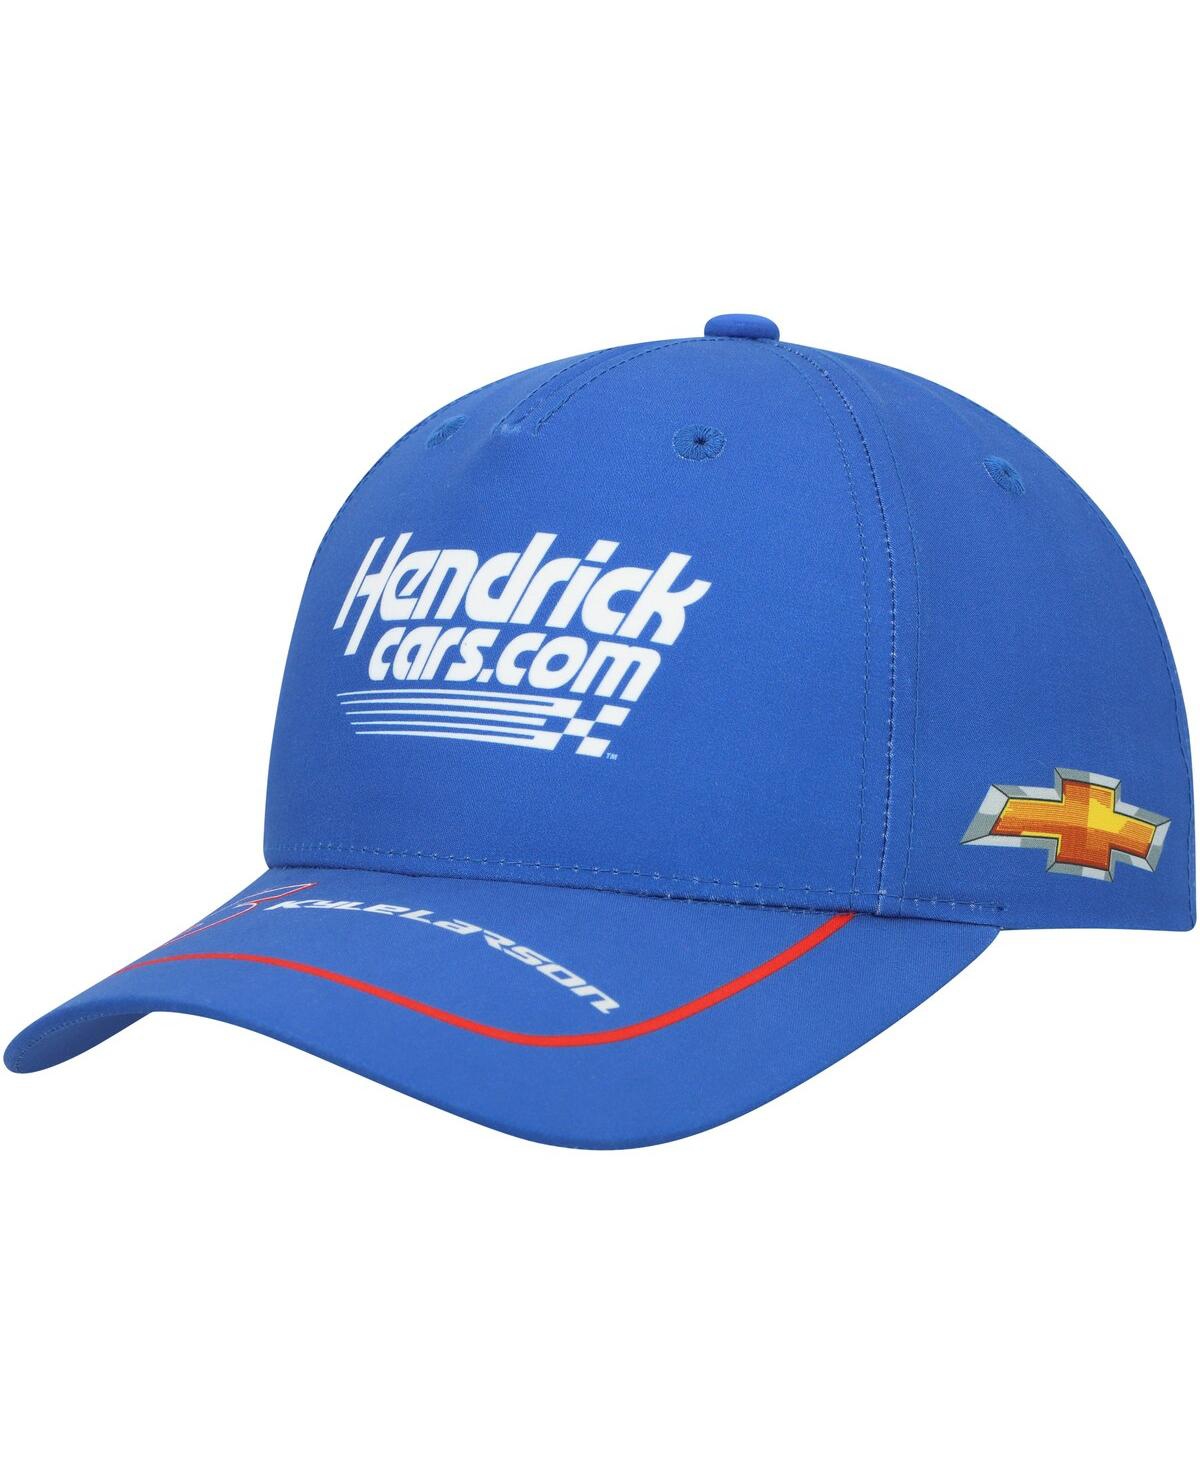 Shop Hendrick Motorsports Team Collection Men's  Royal Kyle Larson Sponsor Uniform Adjustable Hat